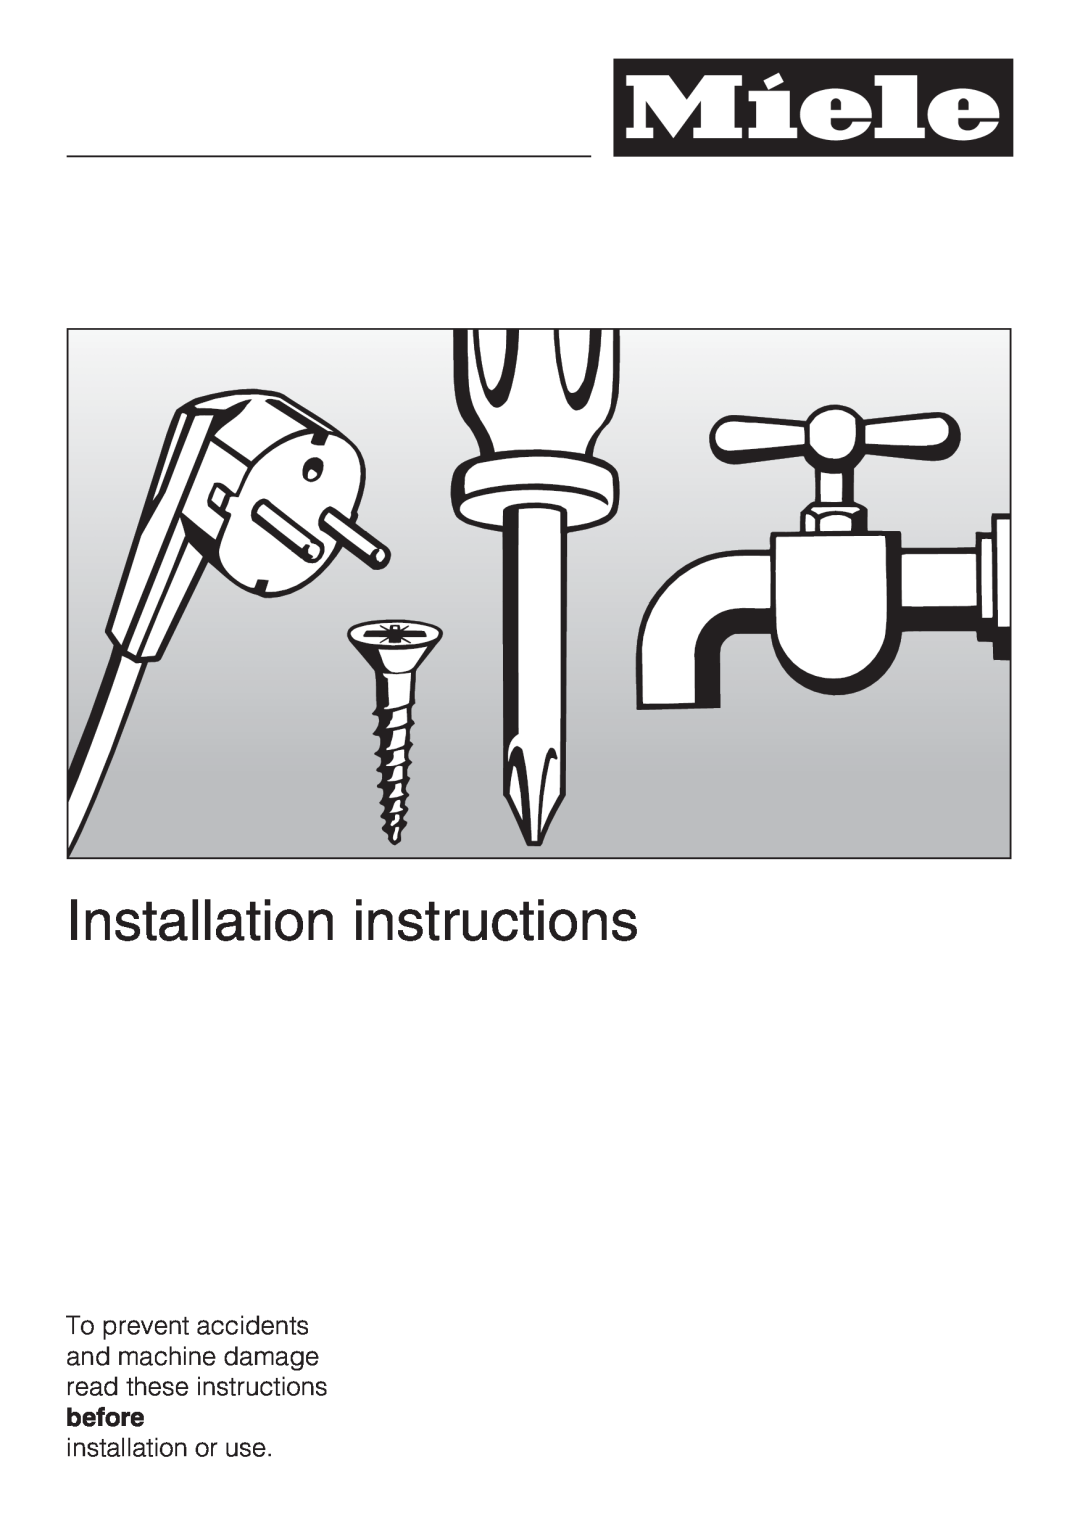 Miele KWT4154UG1 installation instructions Installation instructions, installation or use 